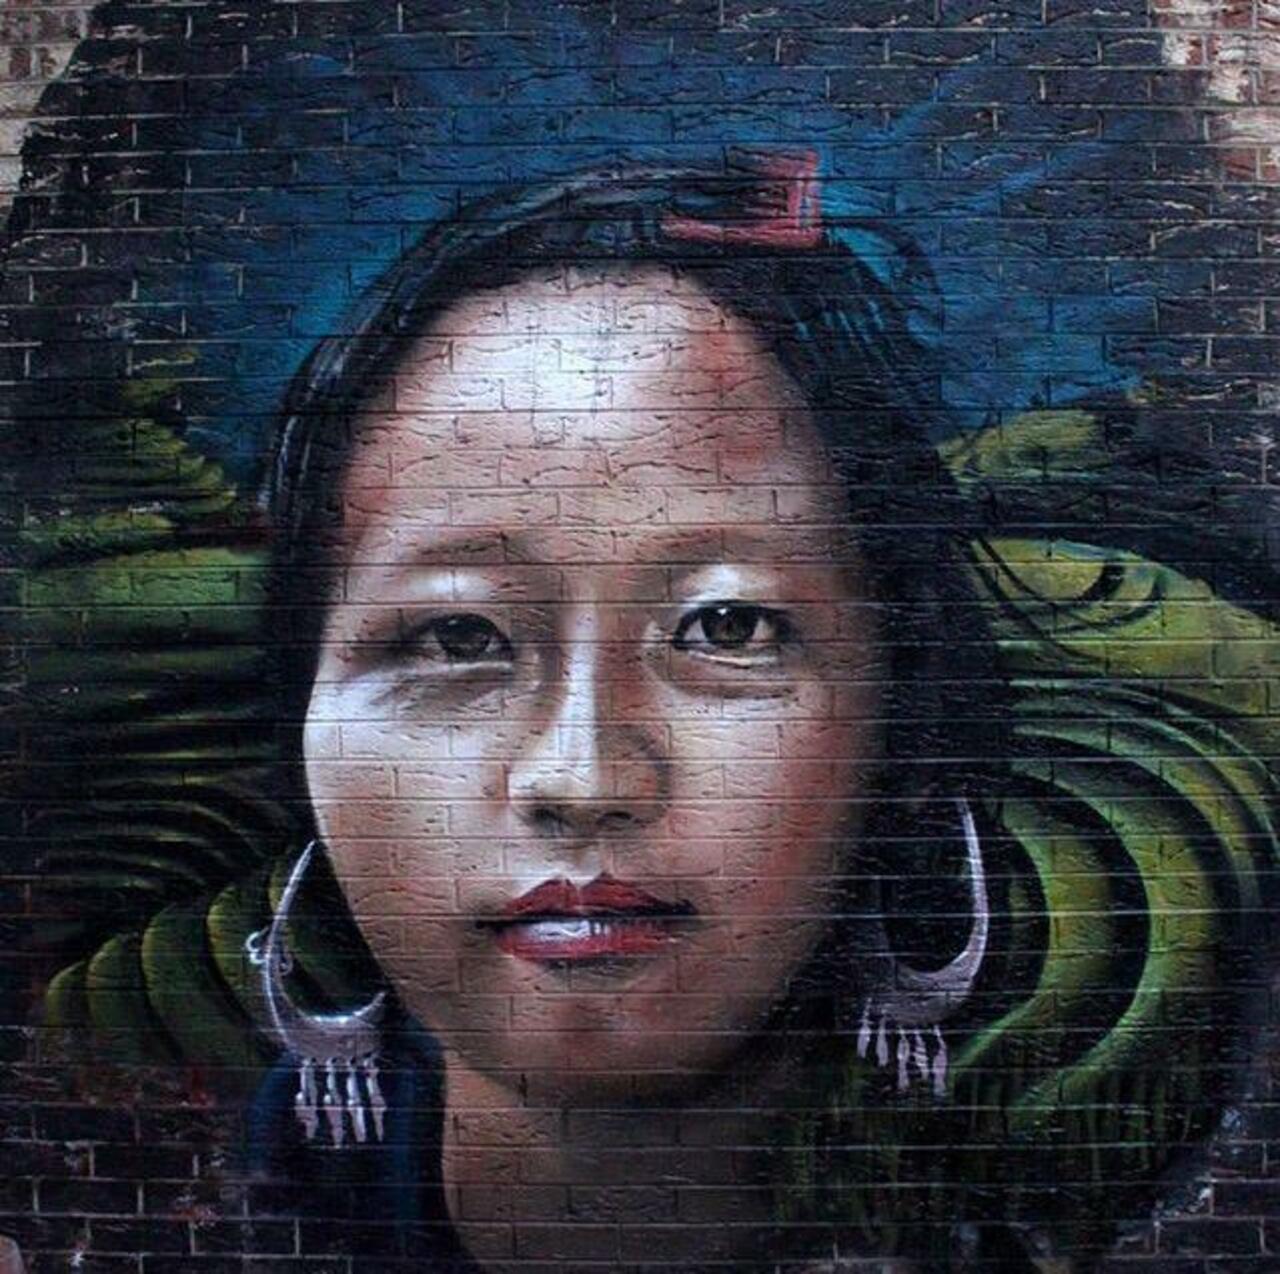 RT belilac "Street Art by cto 

#art #mural #graffiti #streetart http://t.co/jWc6WJ6Yda"